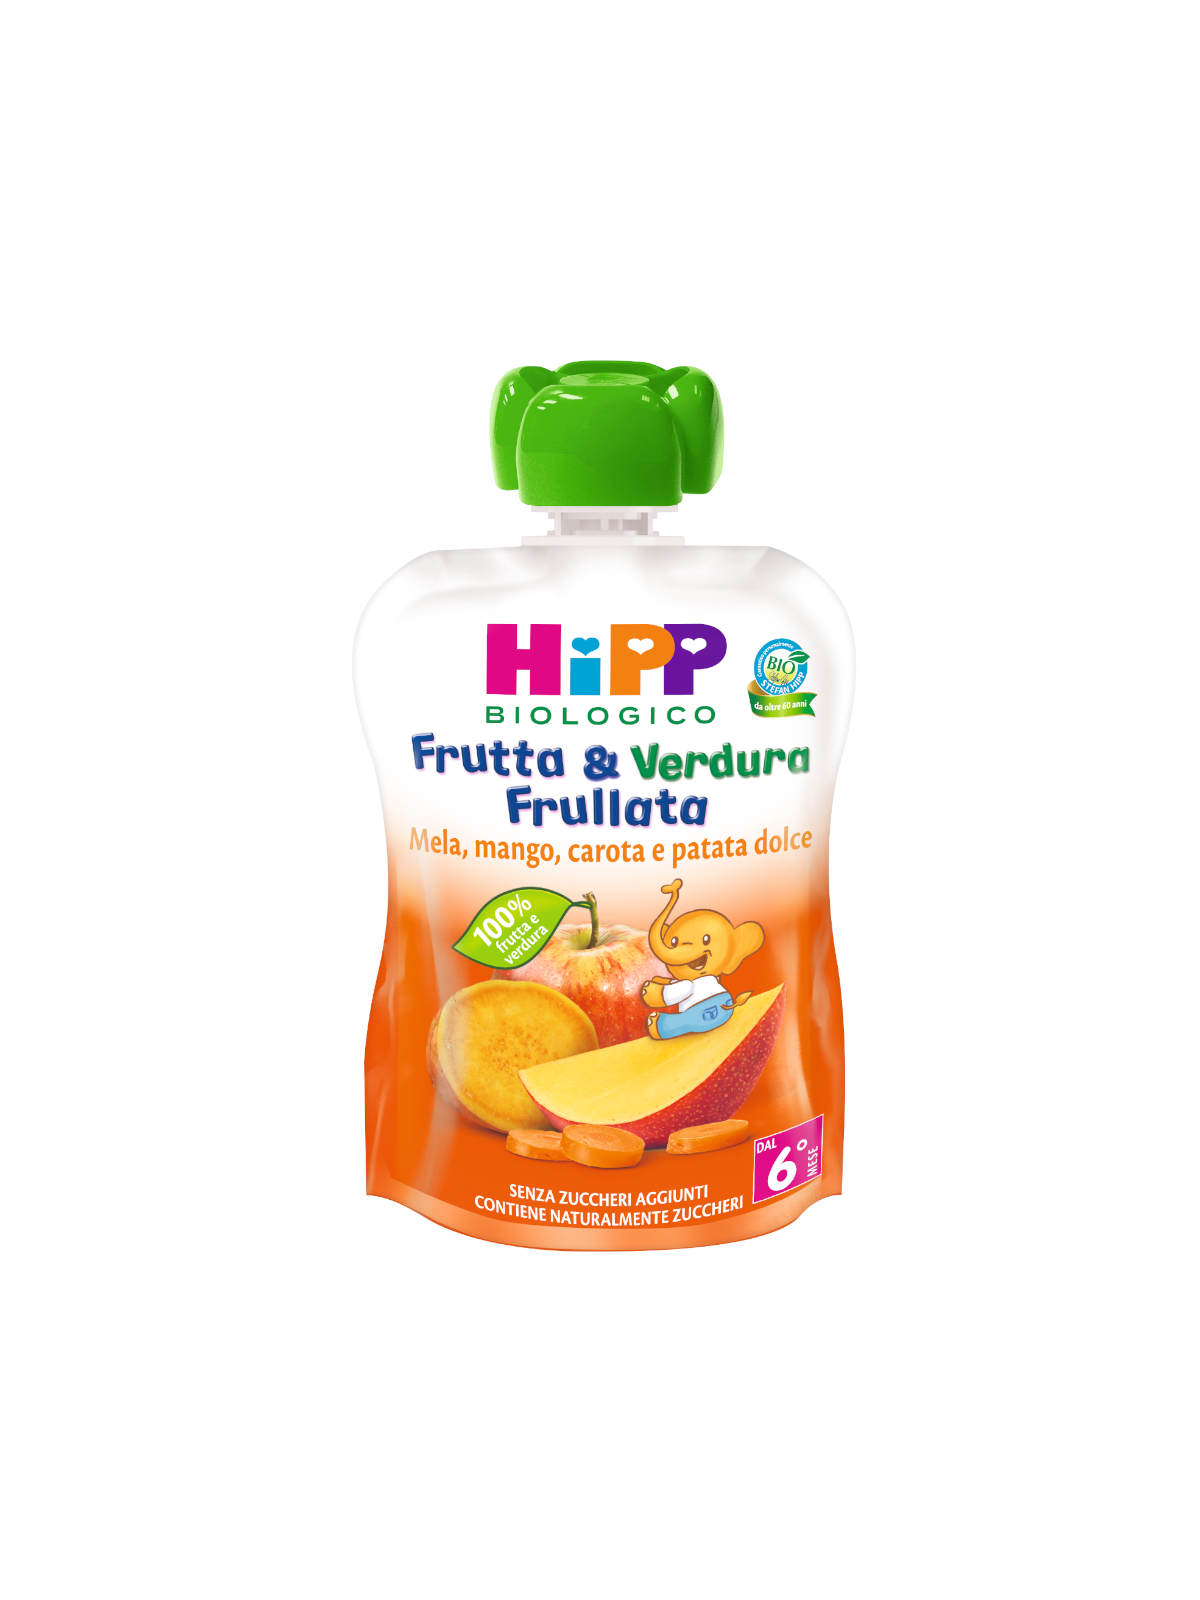 Frutta e verdura frullata mela mango carota patata dolce 90 gr - Bimbostore